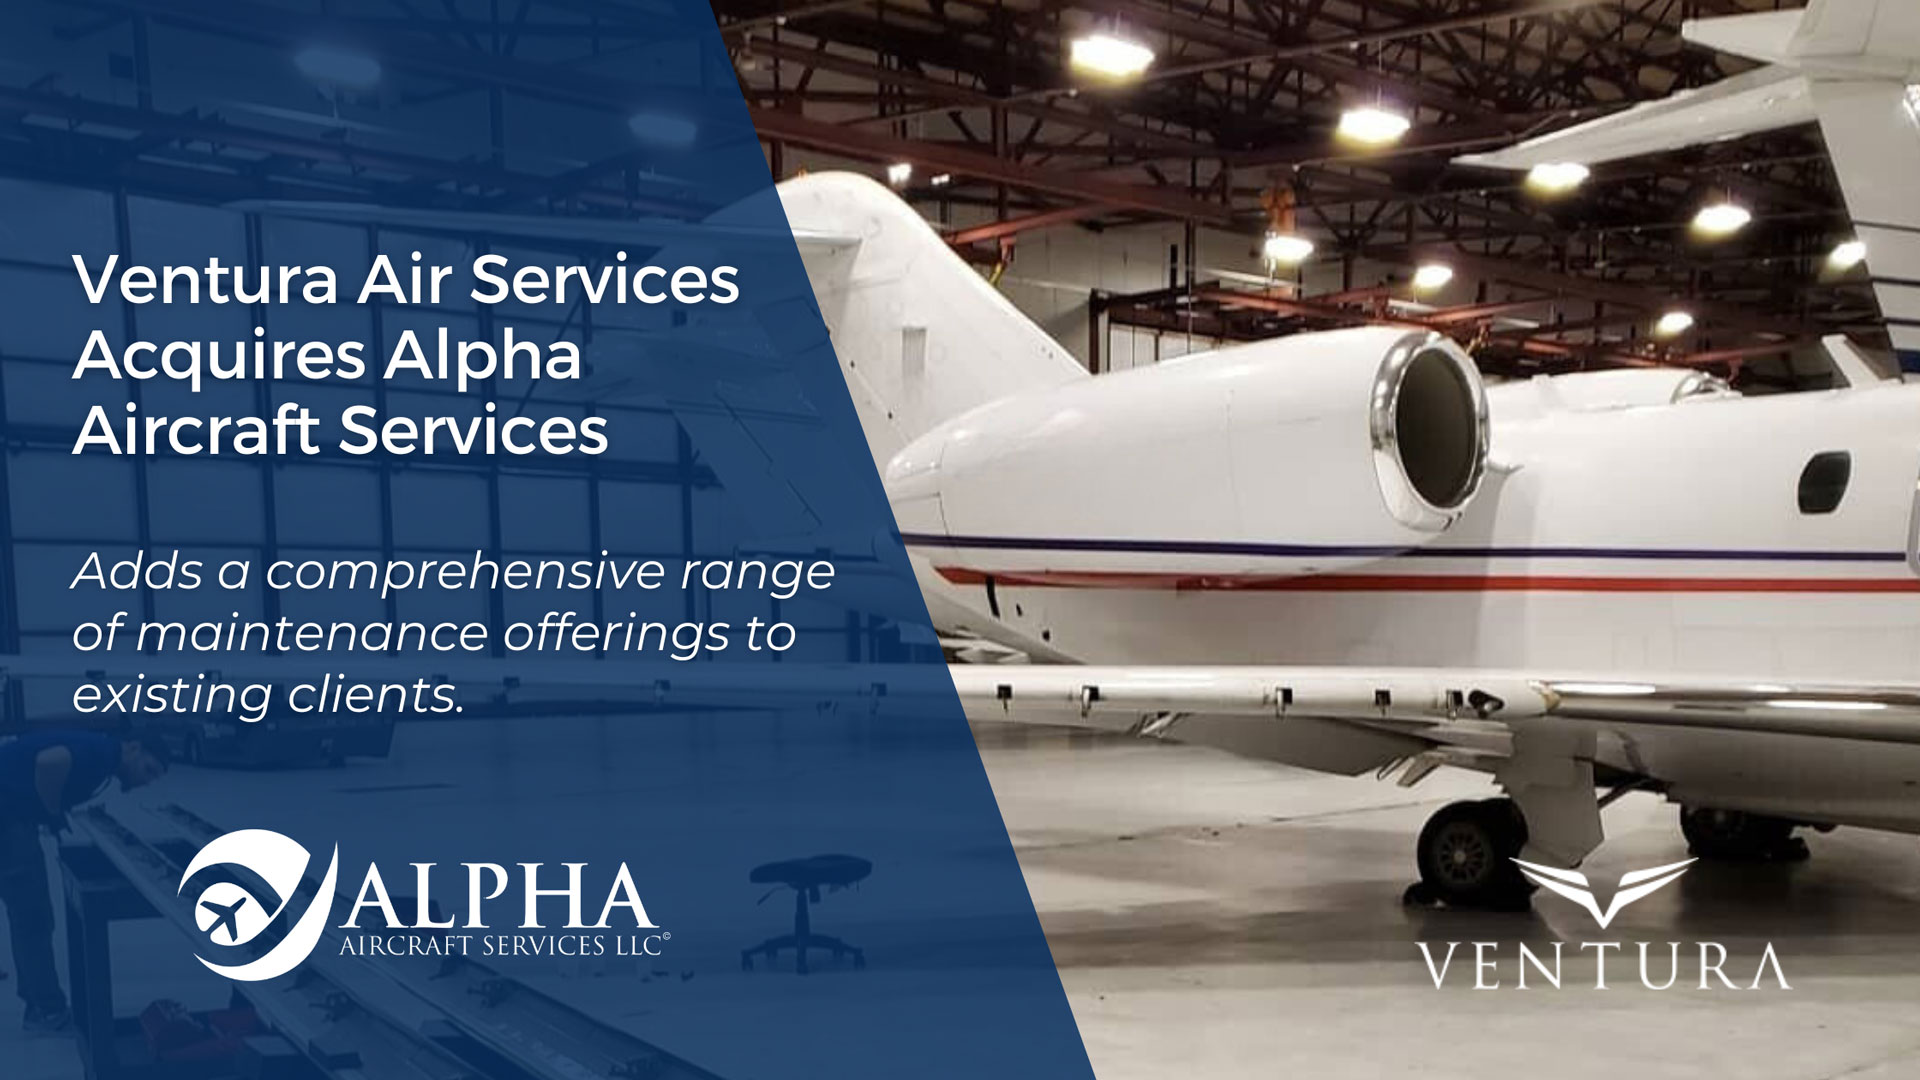 Press Release - Alpha Aircraft Services Acquisition